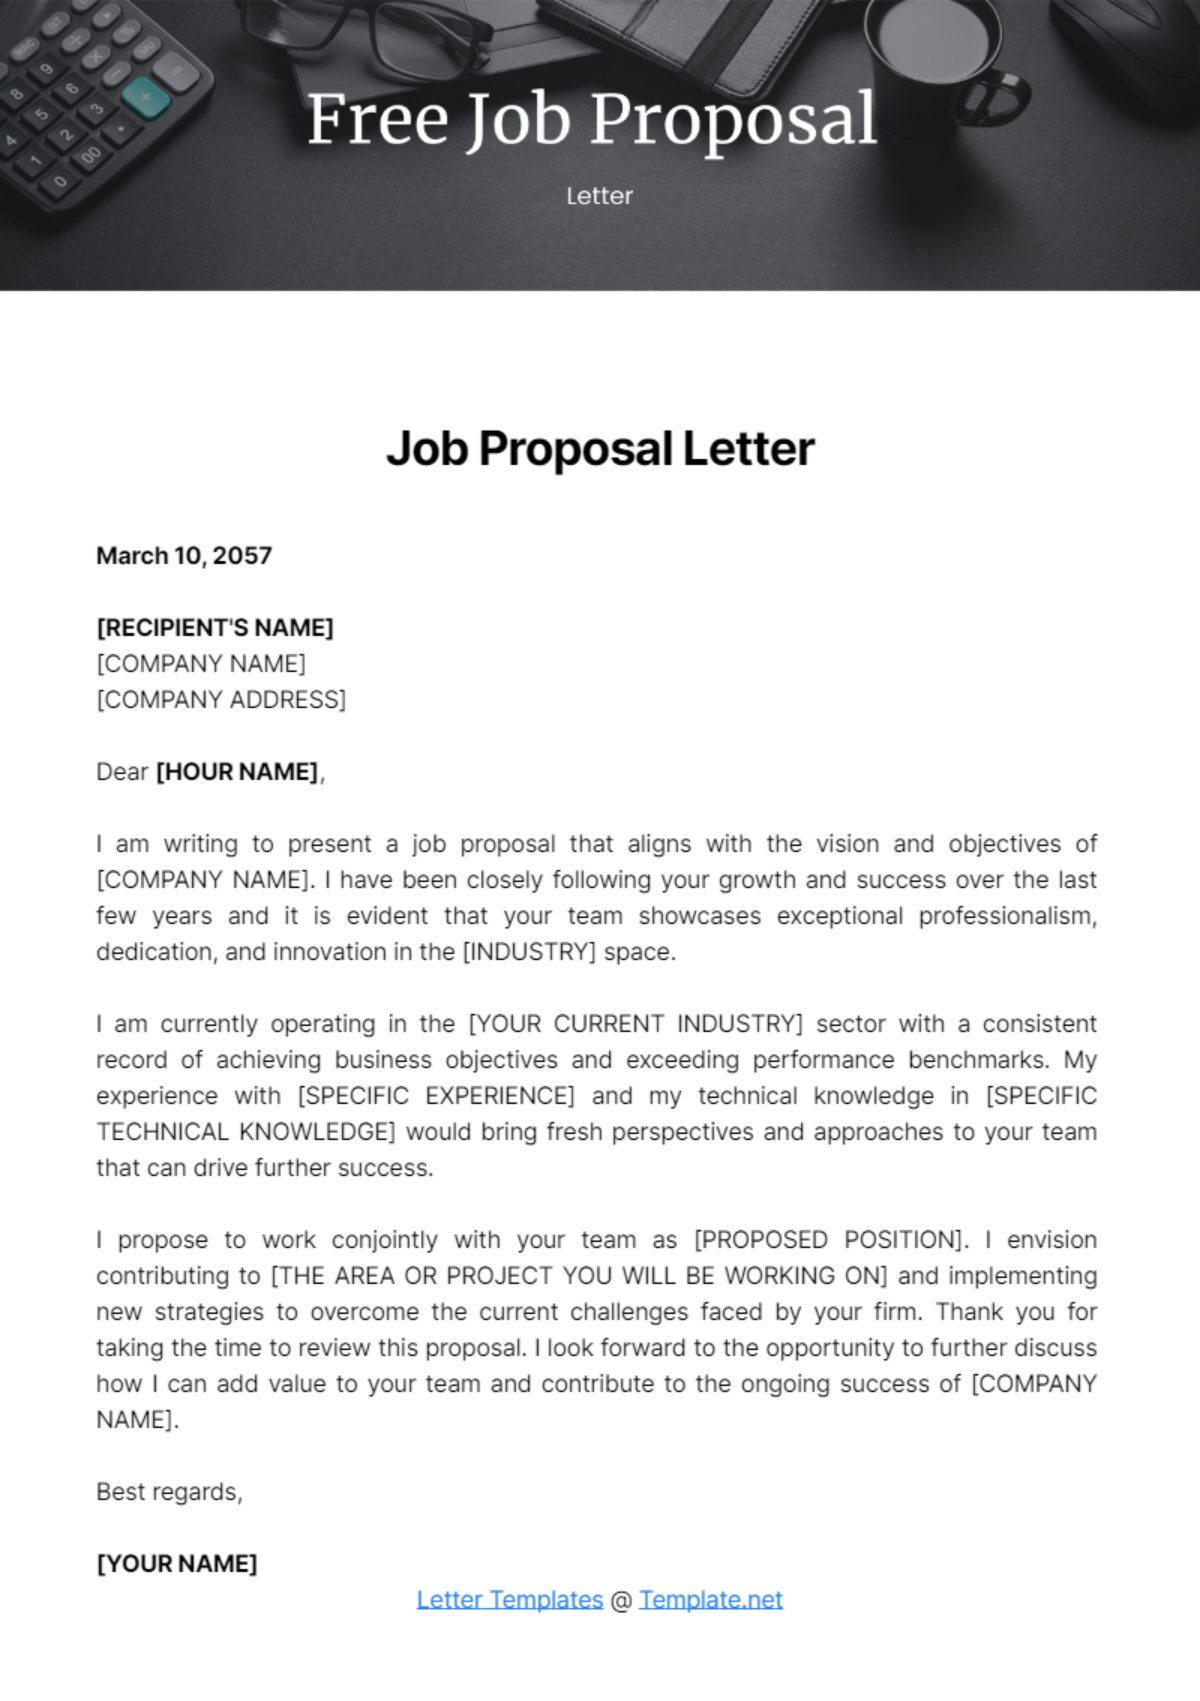 Job Proposal Letter Template